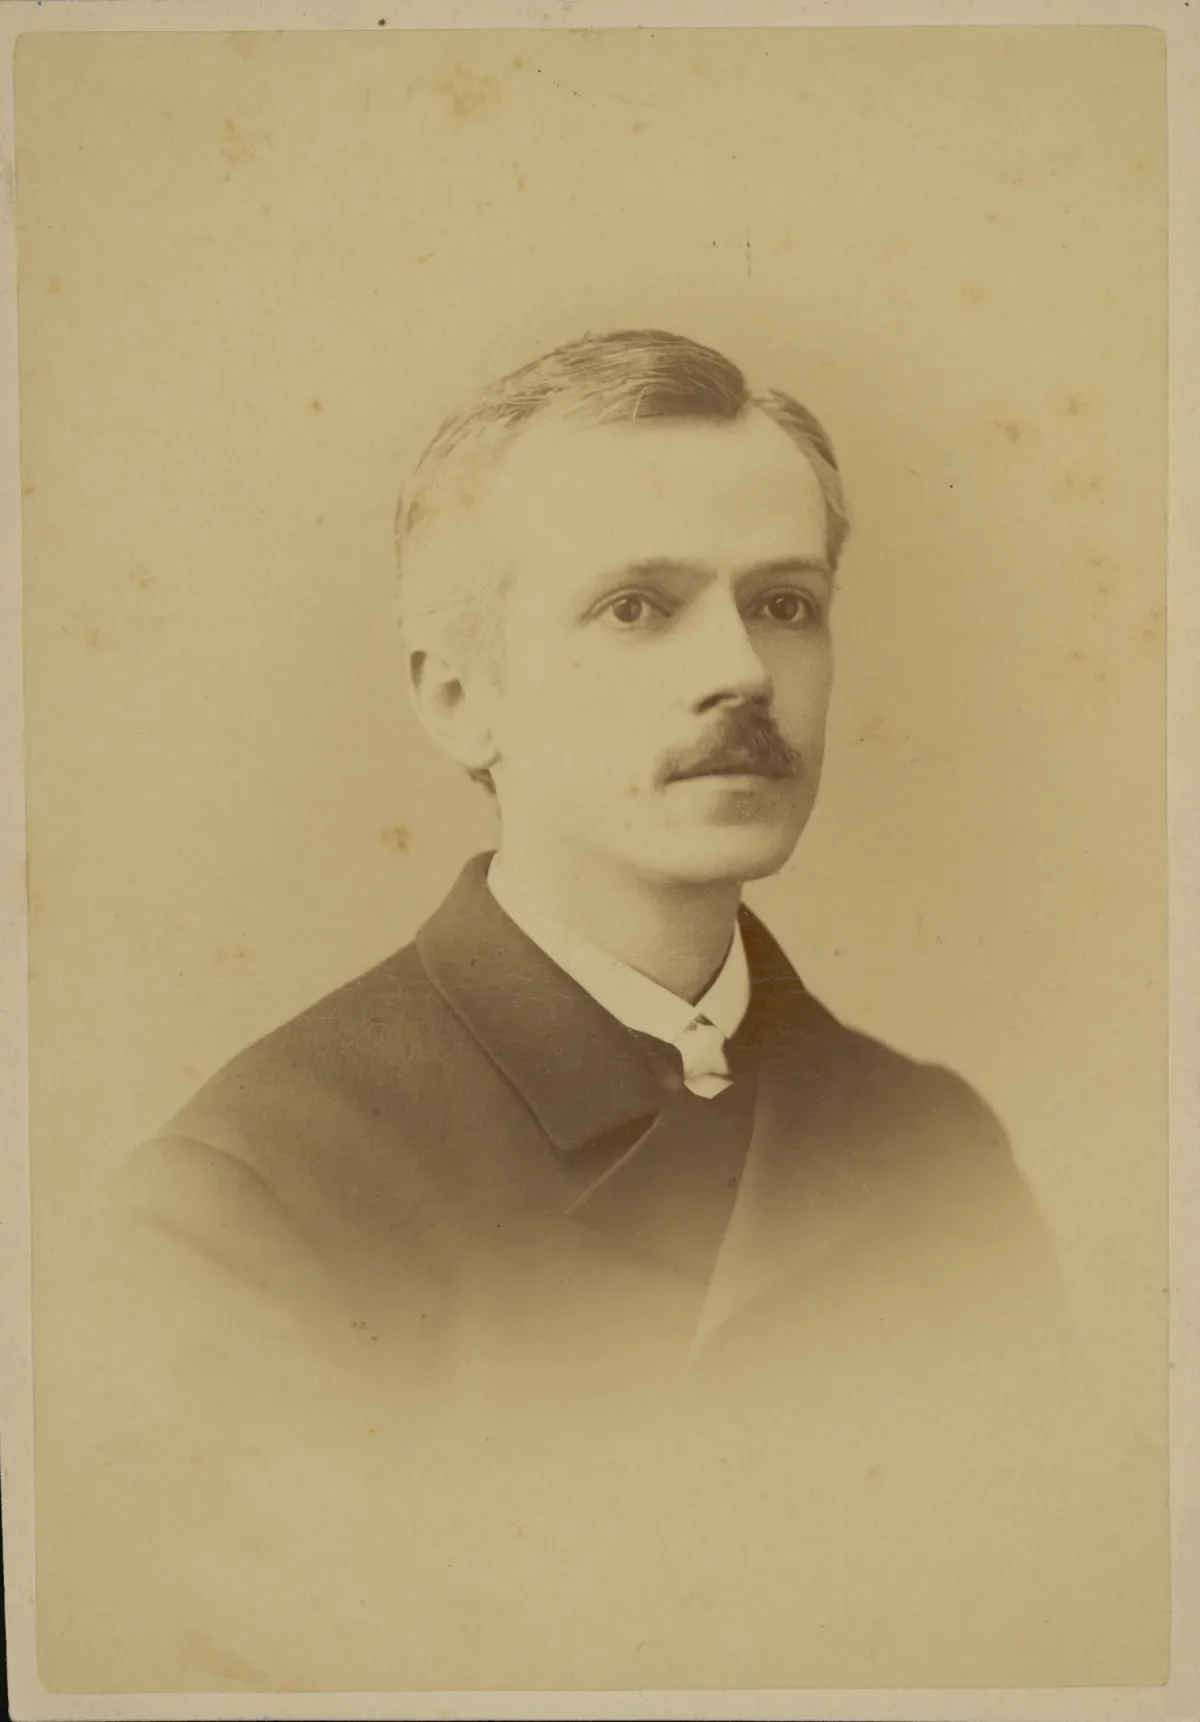 Undated portrait of Reverend James Owen Dorsey.